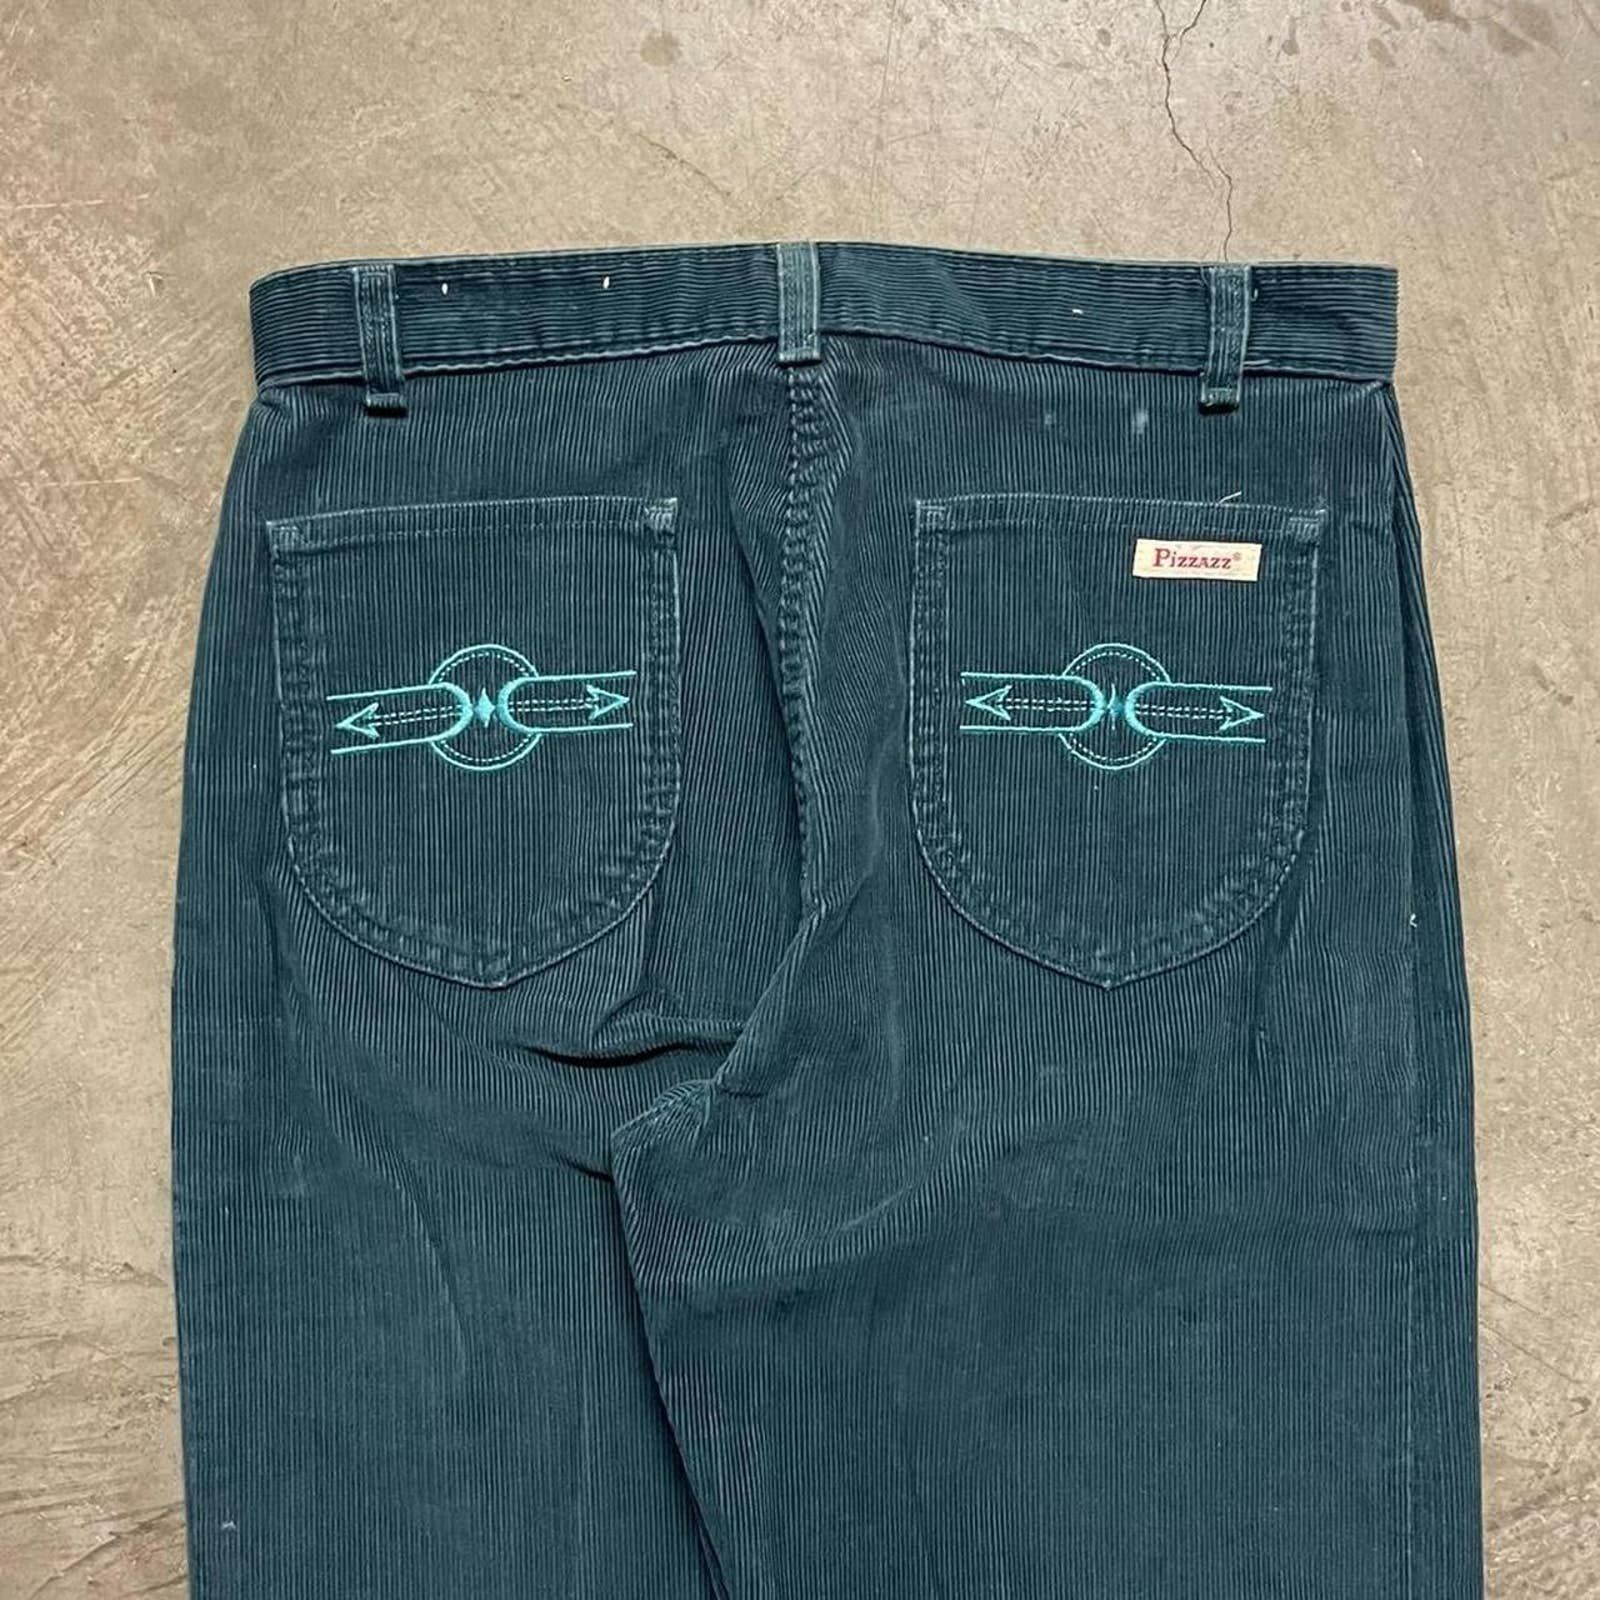 Vintage Vintage 1980s Turquoise Corduroy Casual Fit Pants Womens 16 Size 38" / US 16 / IT 52 - 2 Preview